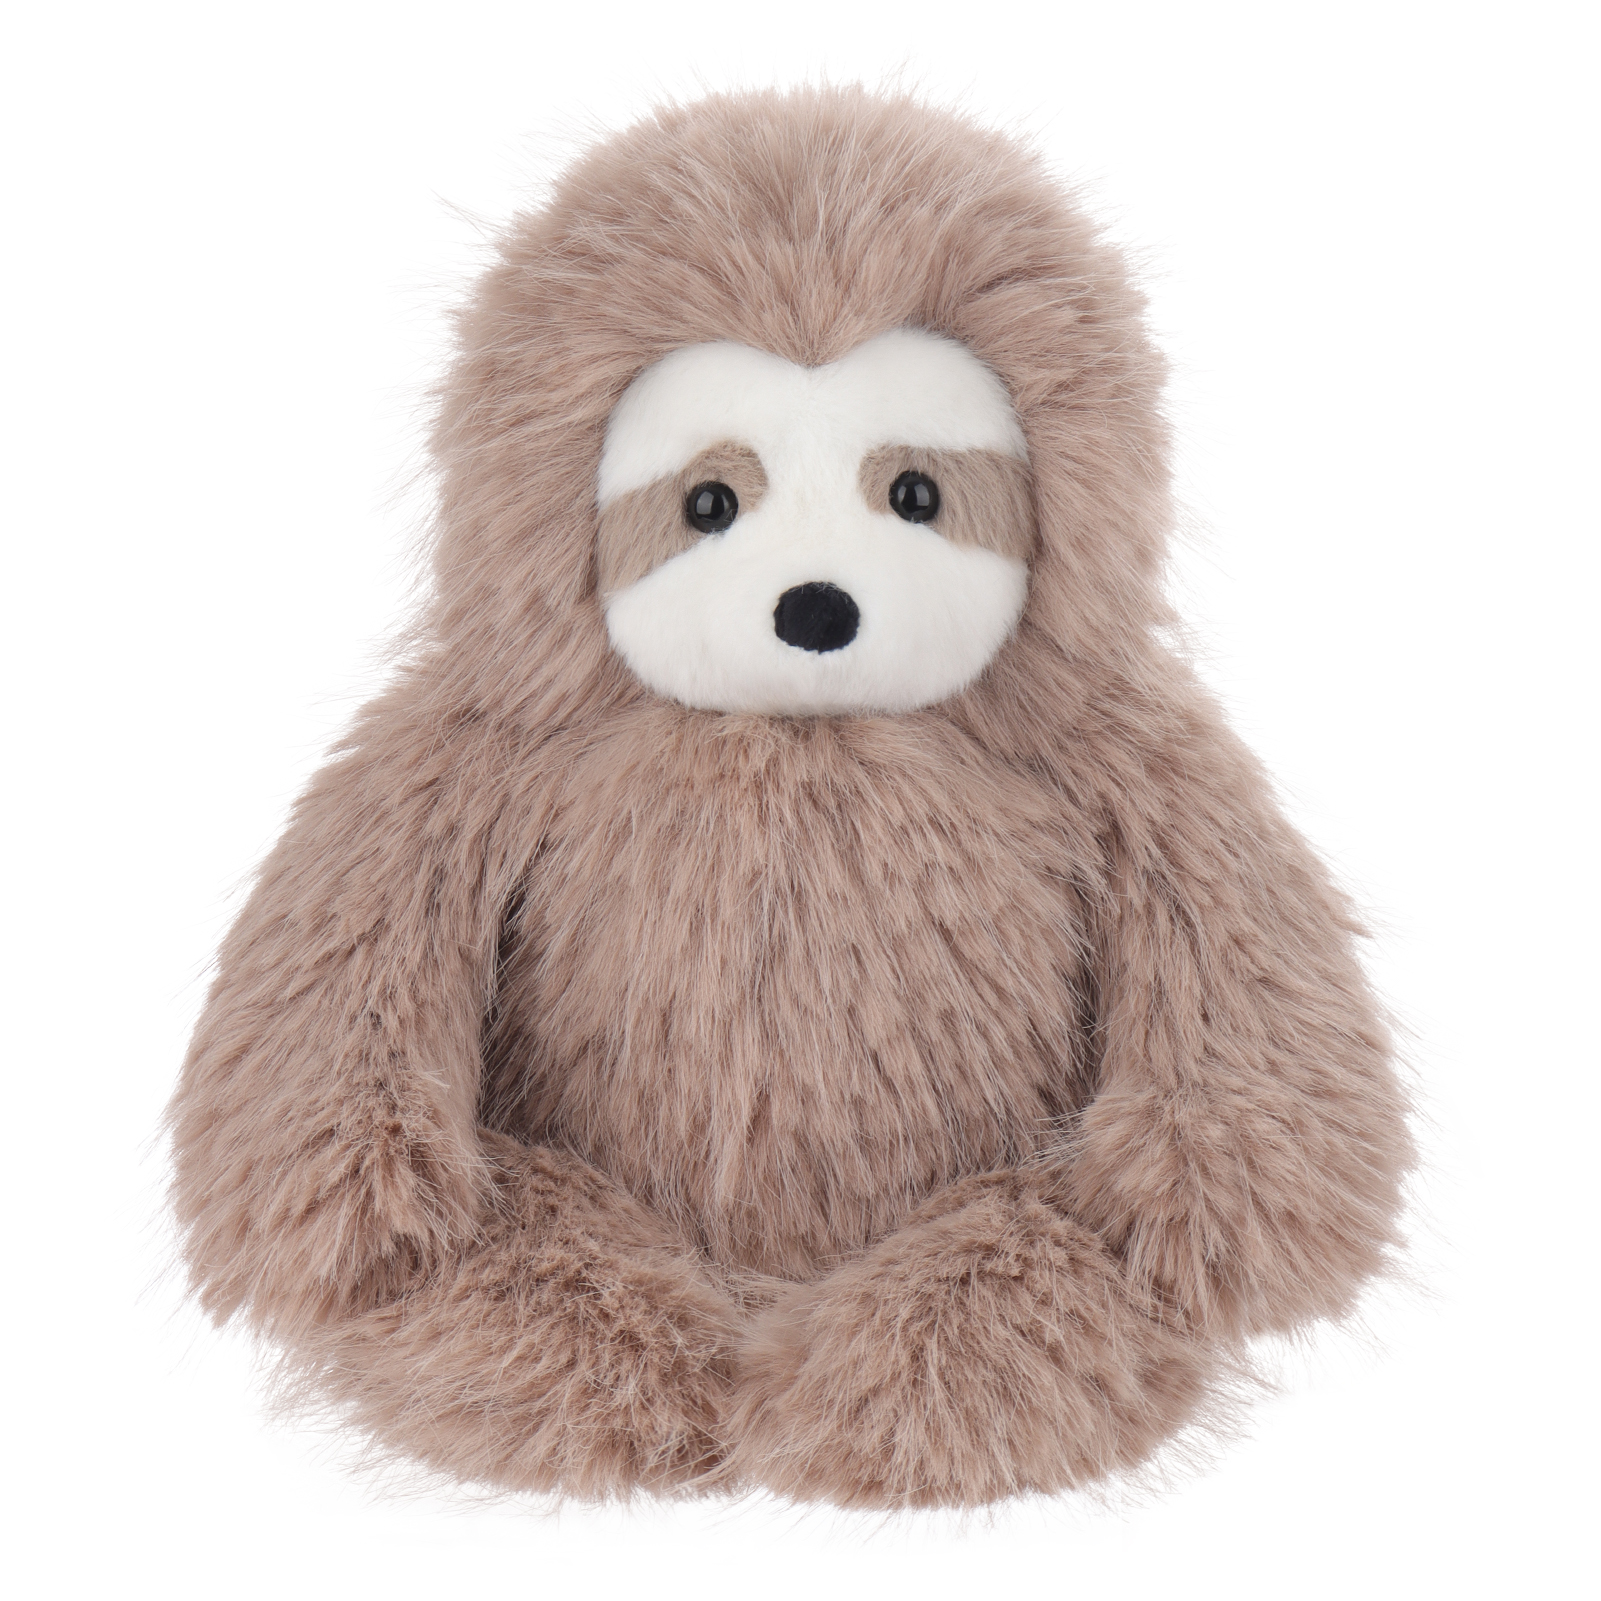 Jungle sloth Stuffed Animal  $25.99